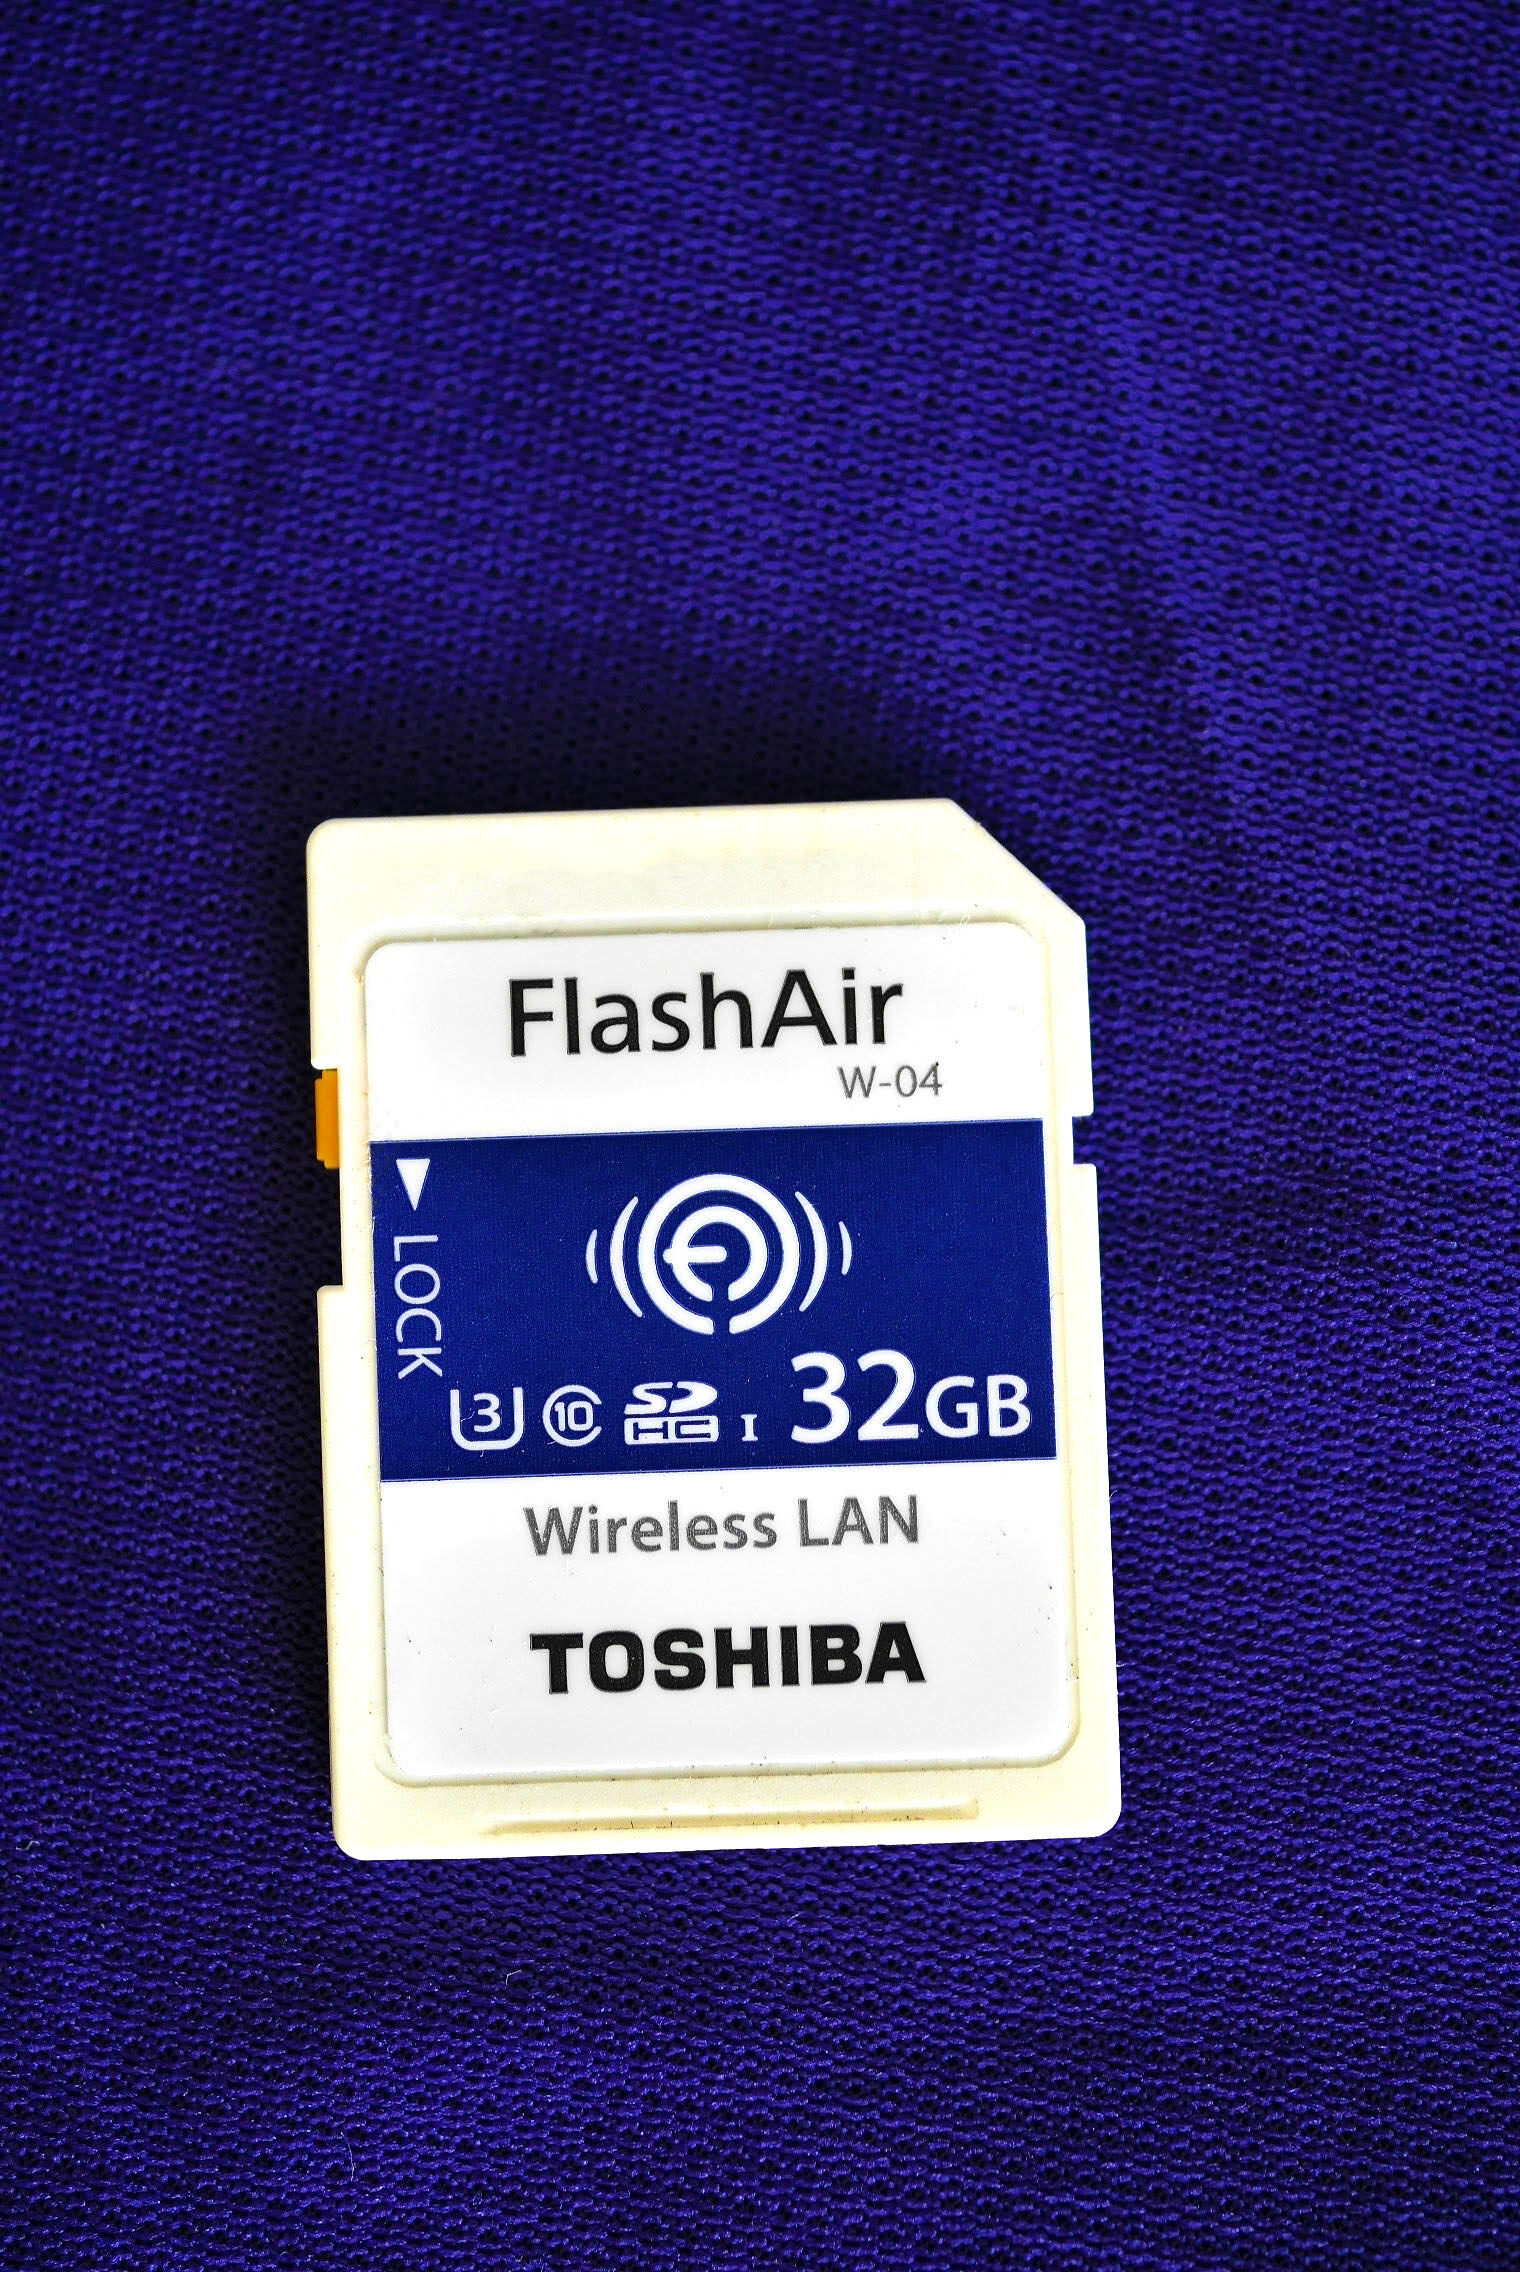 Toshiba FlashAir SD WIFI 32GB W-04 ส่งรูปถ่ายและวิดีโอ โดยโอนผ่าน